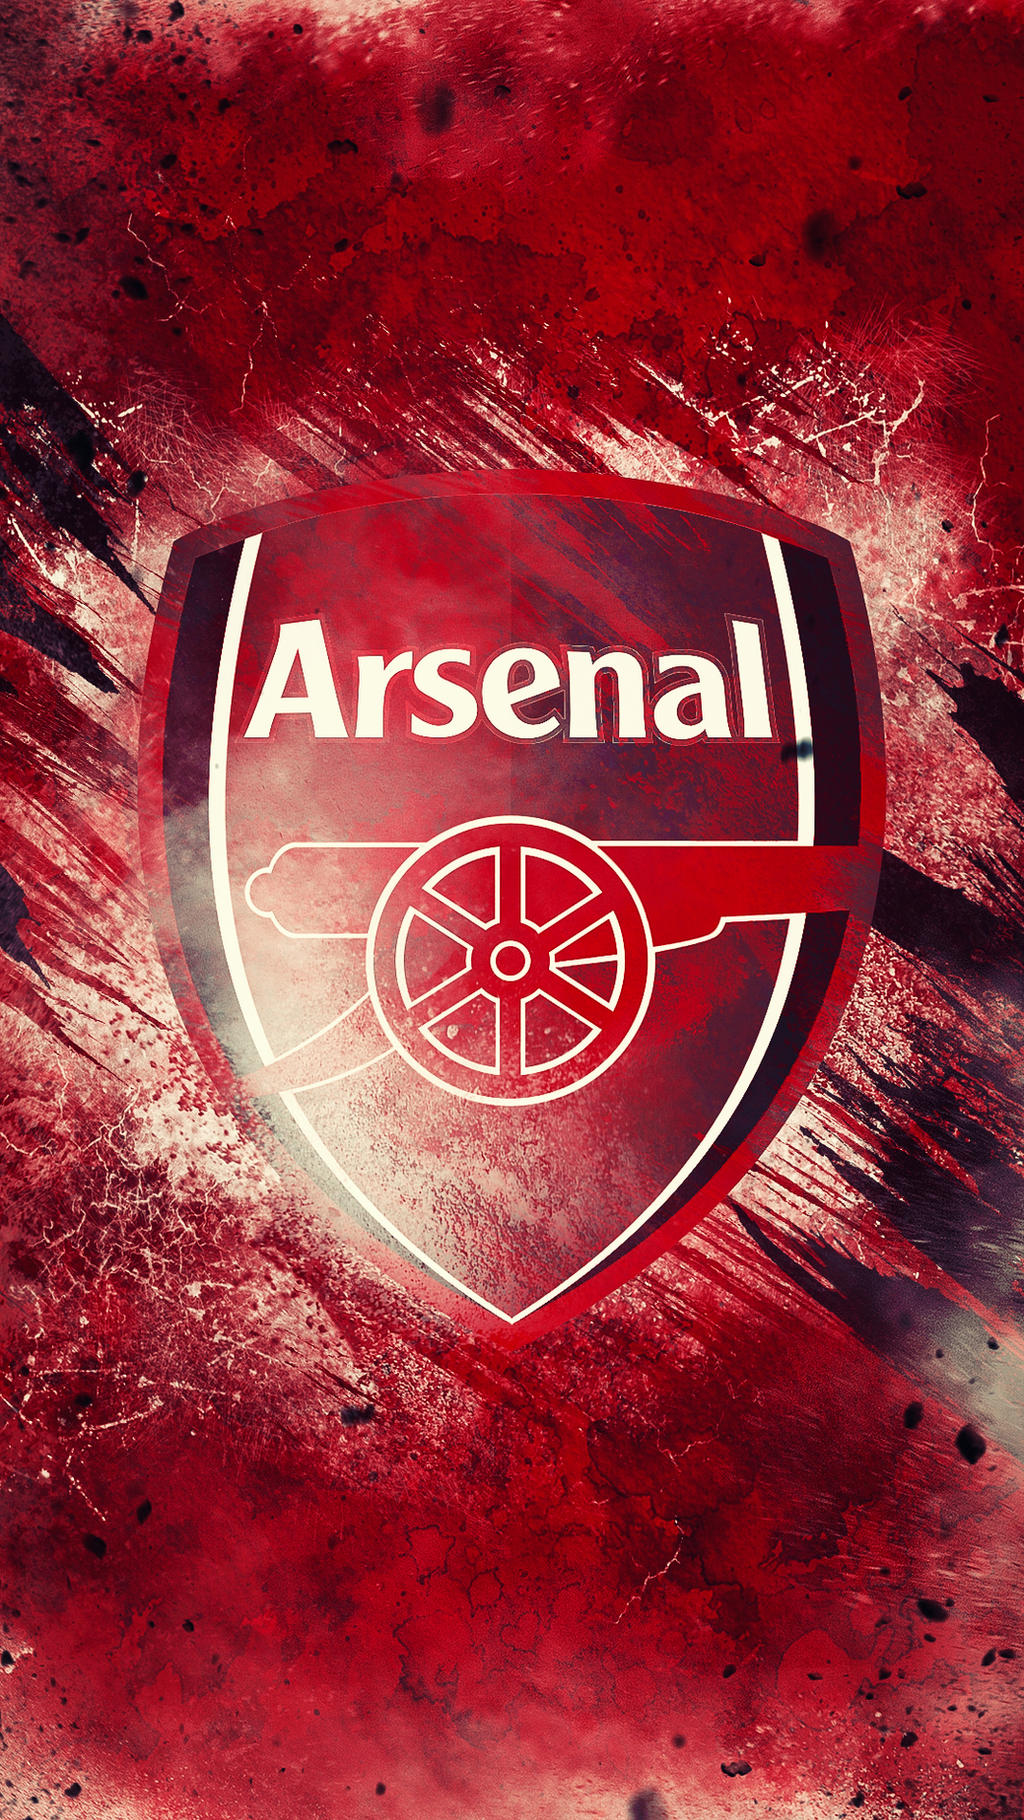 Arsenal - HD Logo Wallpaper by Kerimov23 on DeviantArt